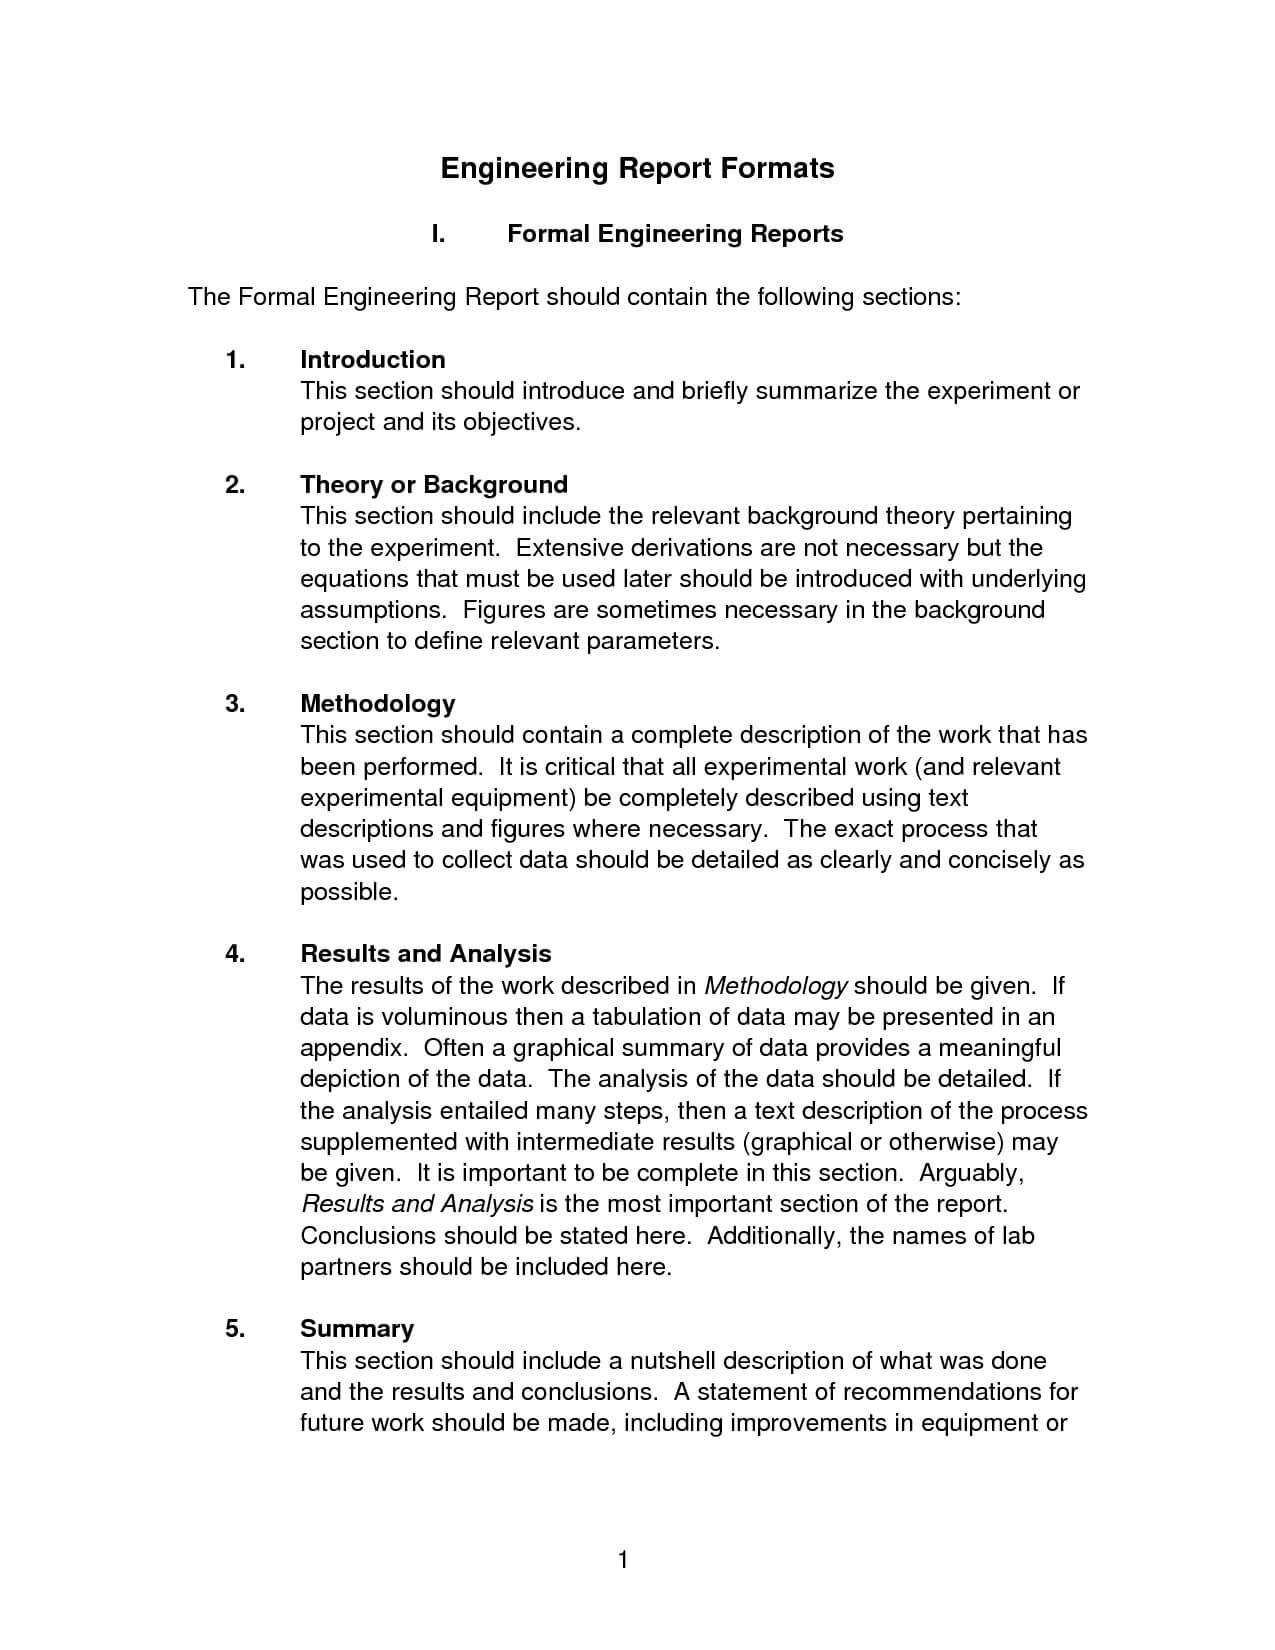 Engineering Report Template Project Progress Lab Example Pdf Regarding Engineering Lab Report Template